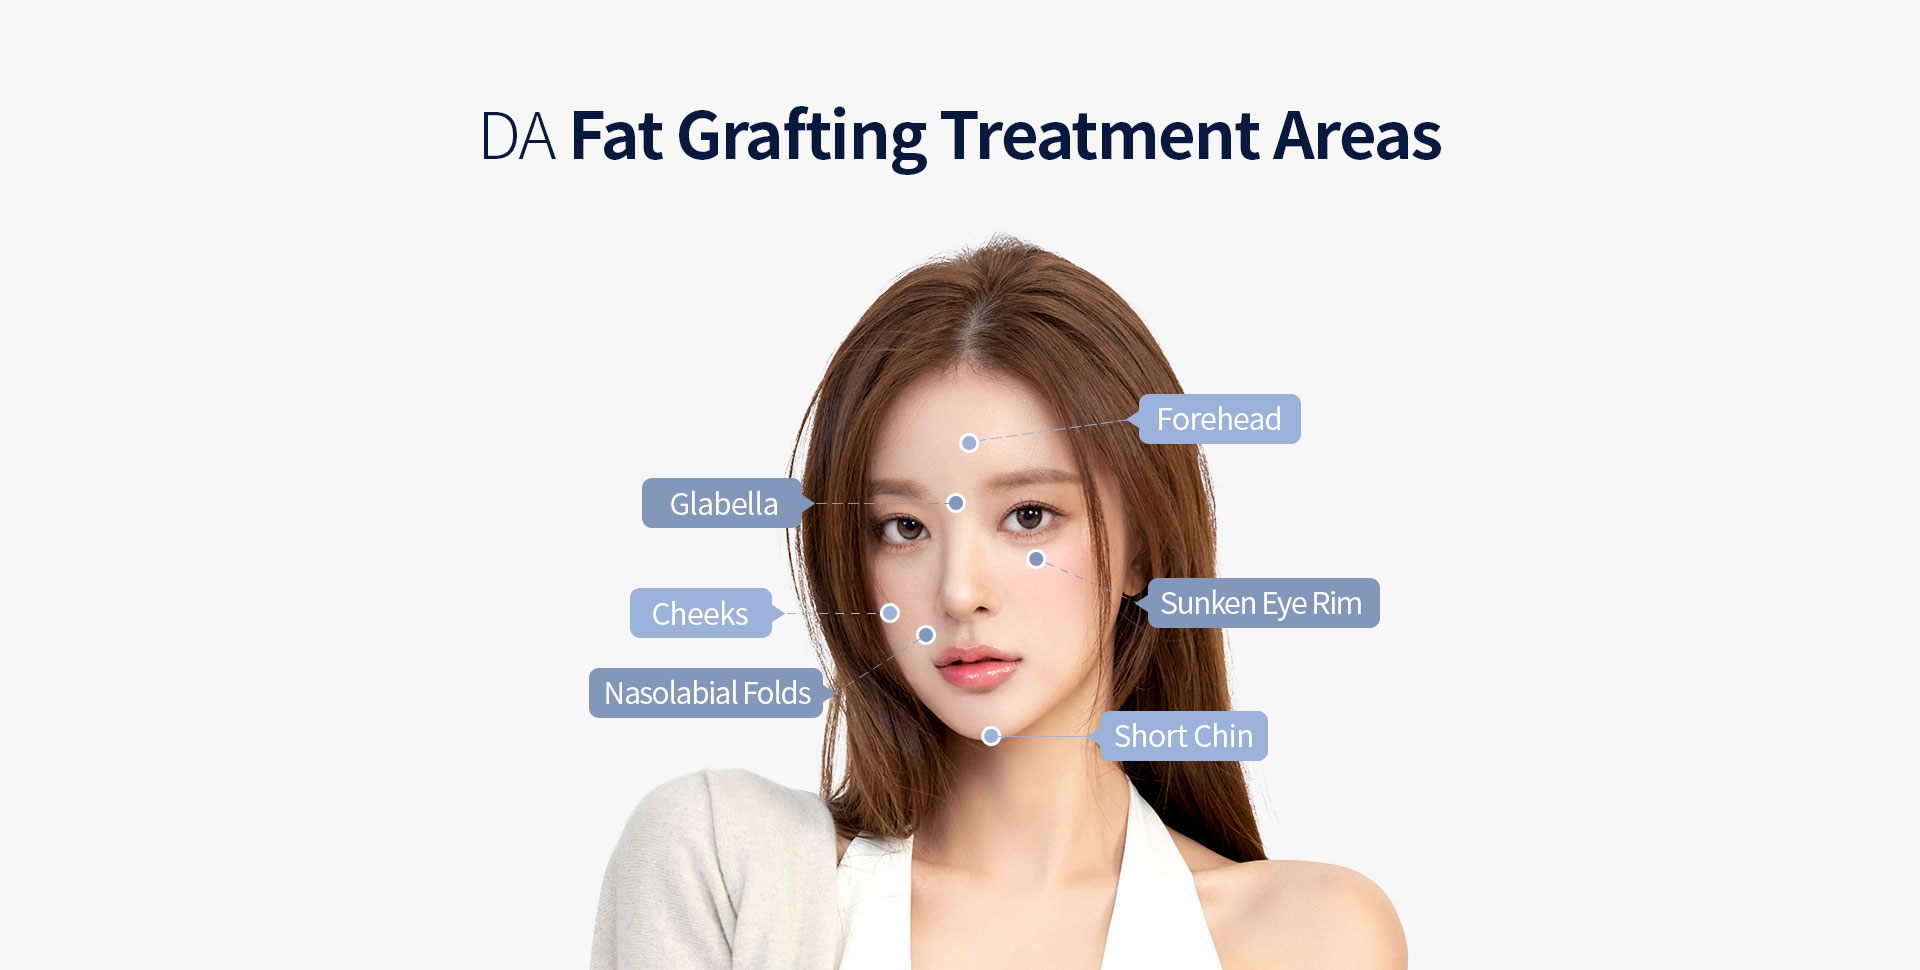 DA Fat Grafting Treatment Areas